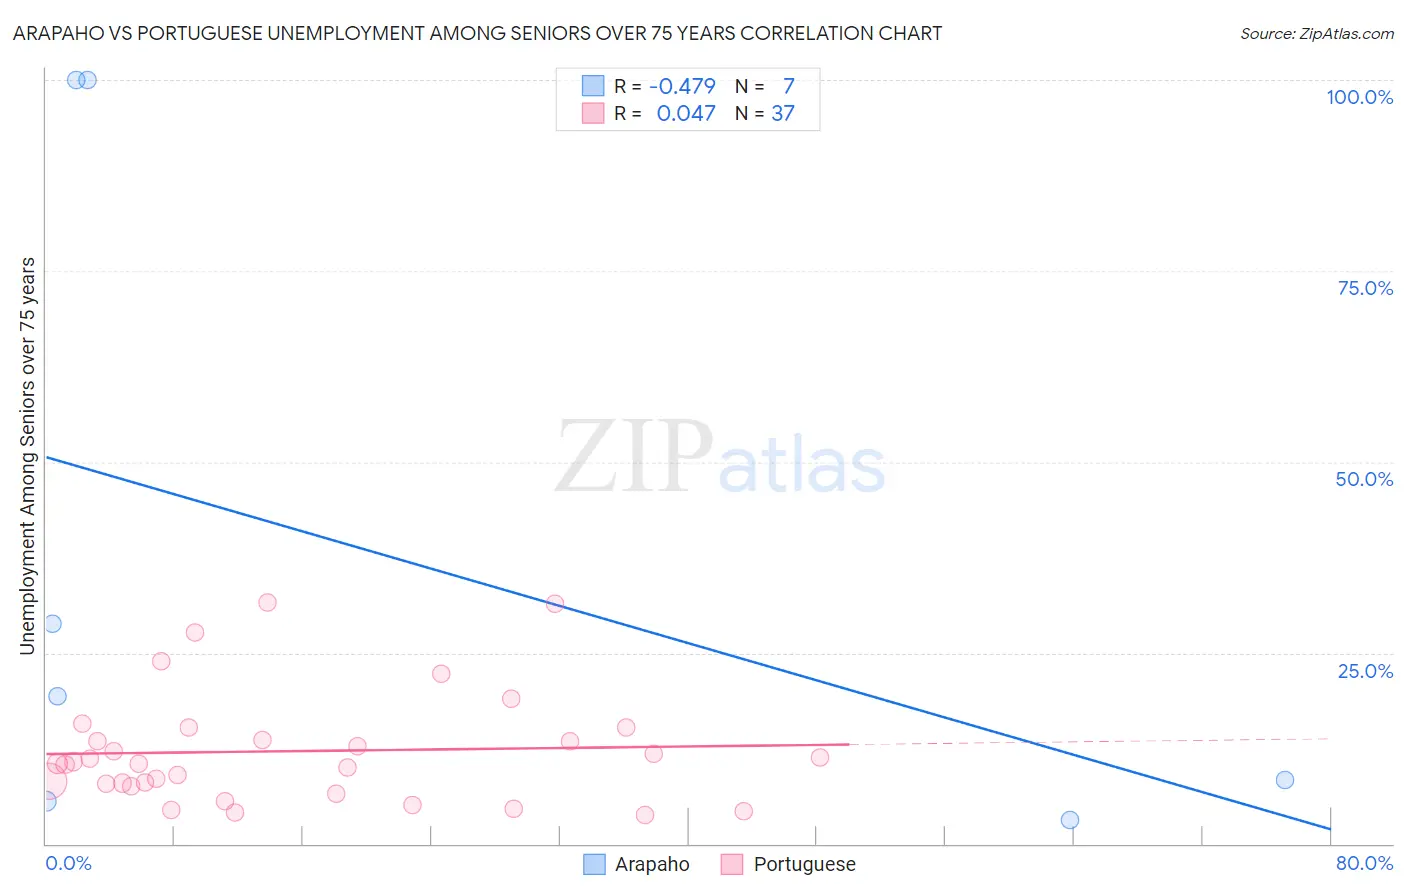 Arapaho vs Portuguese Unemployment Among Seniors over 75 years